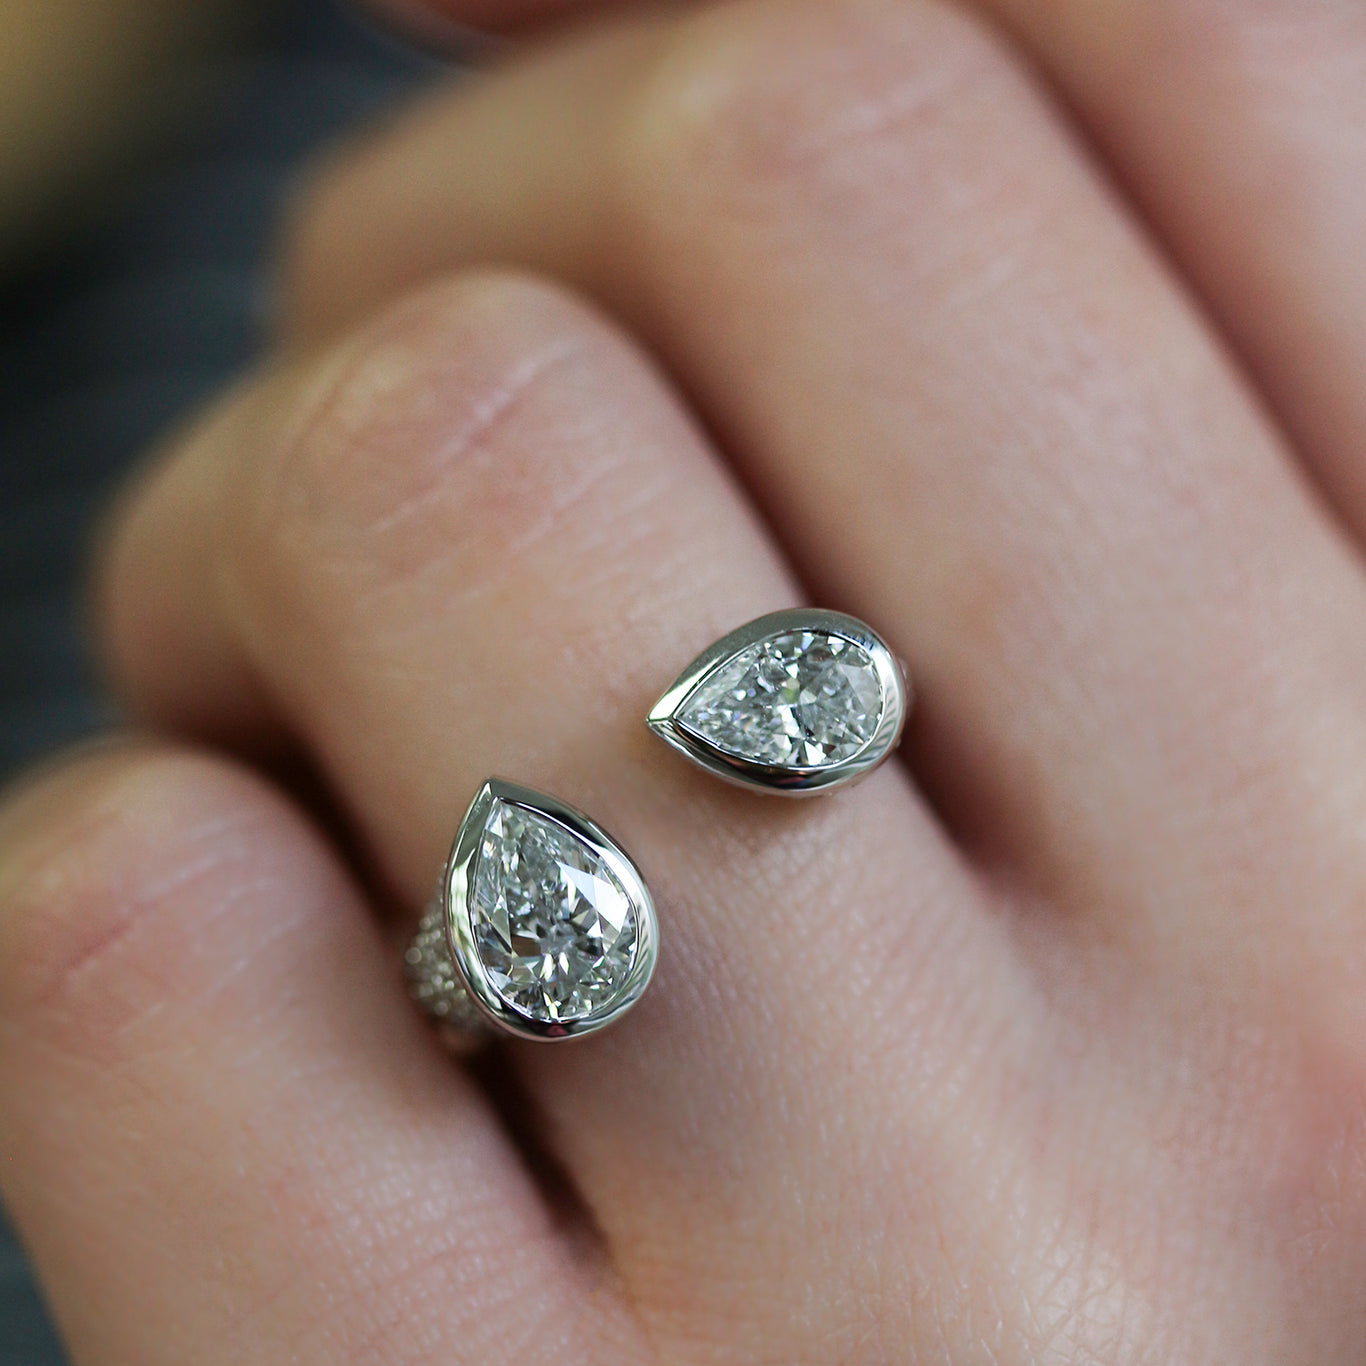 Diamond Ring On Hand Image & Photo (Free Trial) | Bigstock